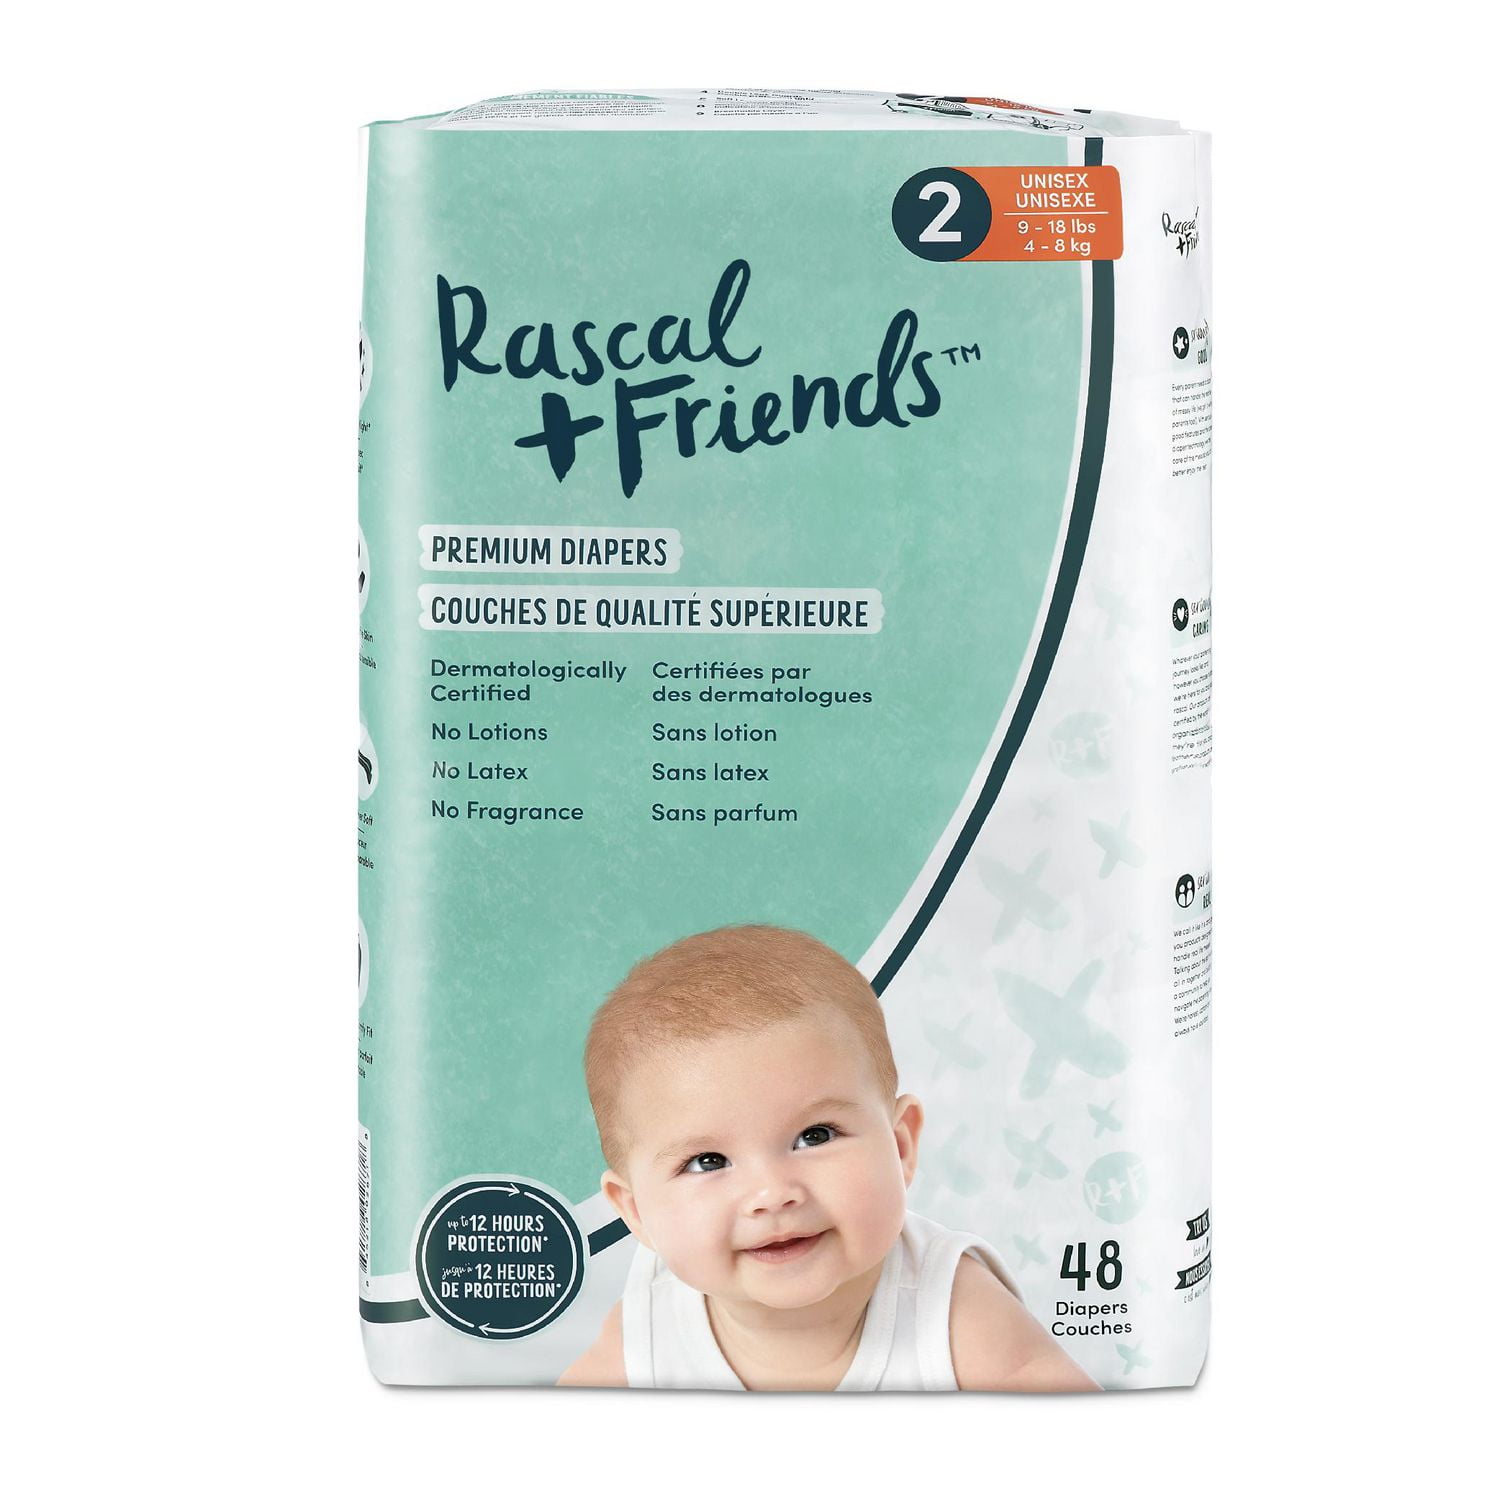 Rascal + Friends Premium Nappies Unisex Newborn Size 1 Review, Disposable  nappy